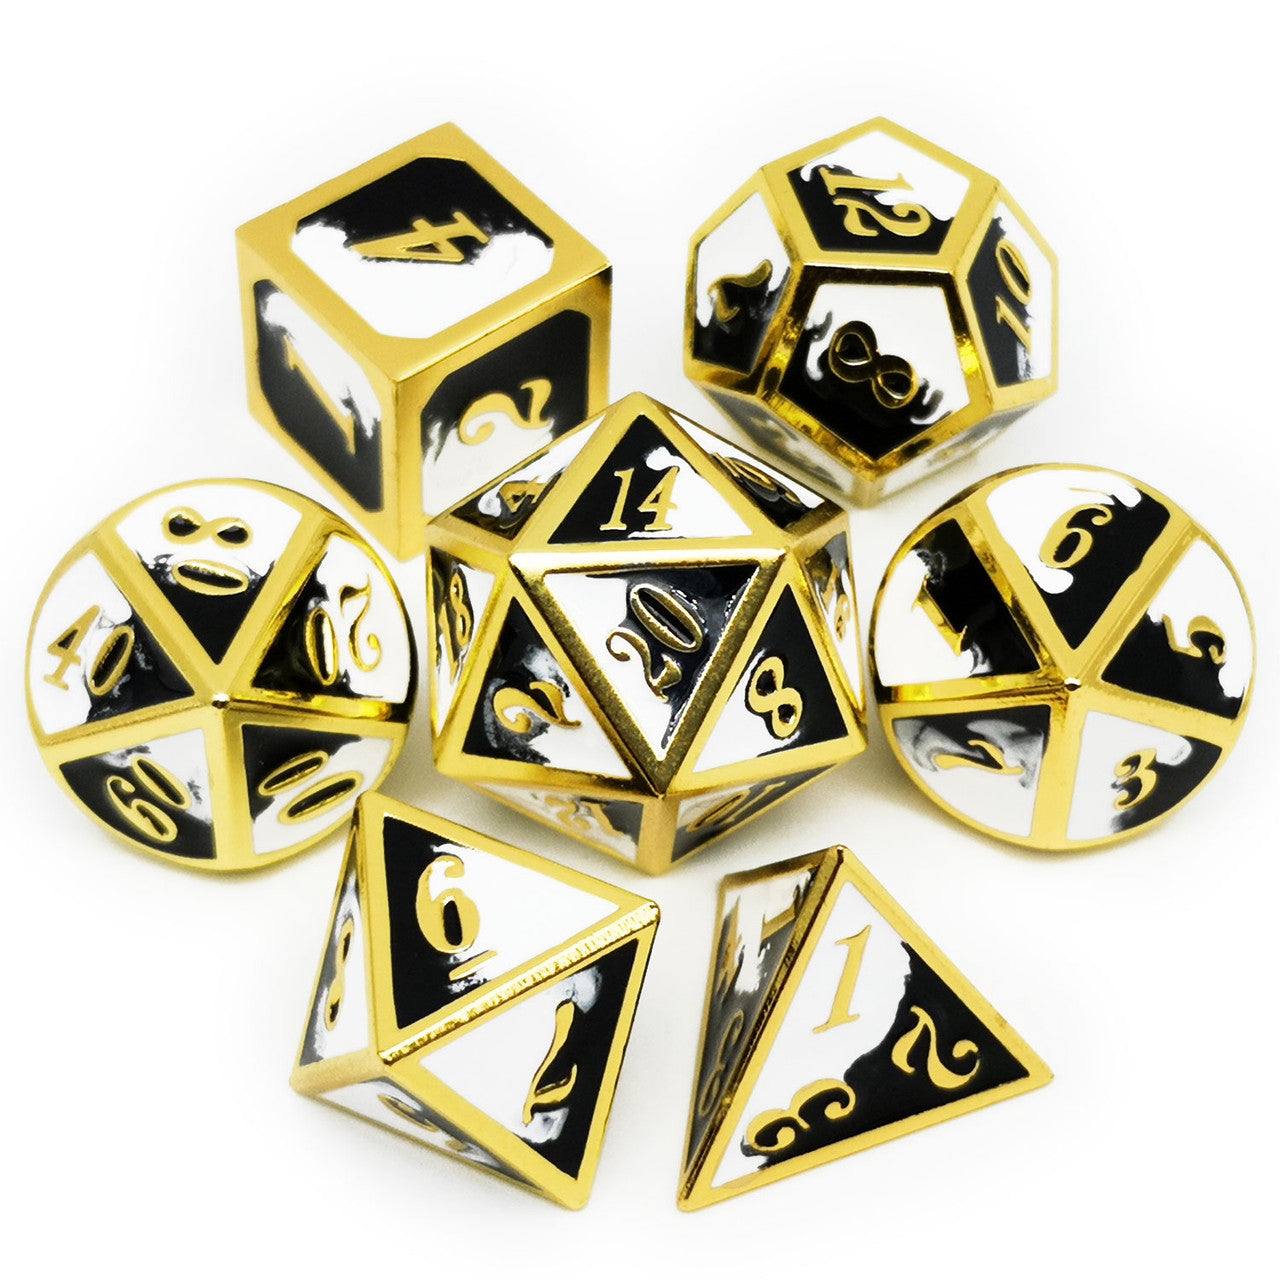 gold metal dice, black white dice, black dice, white dice